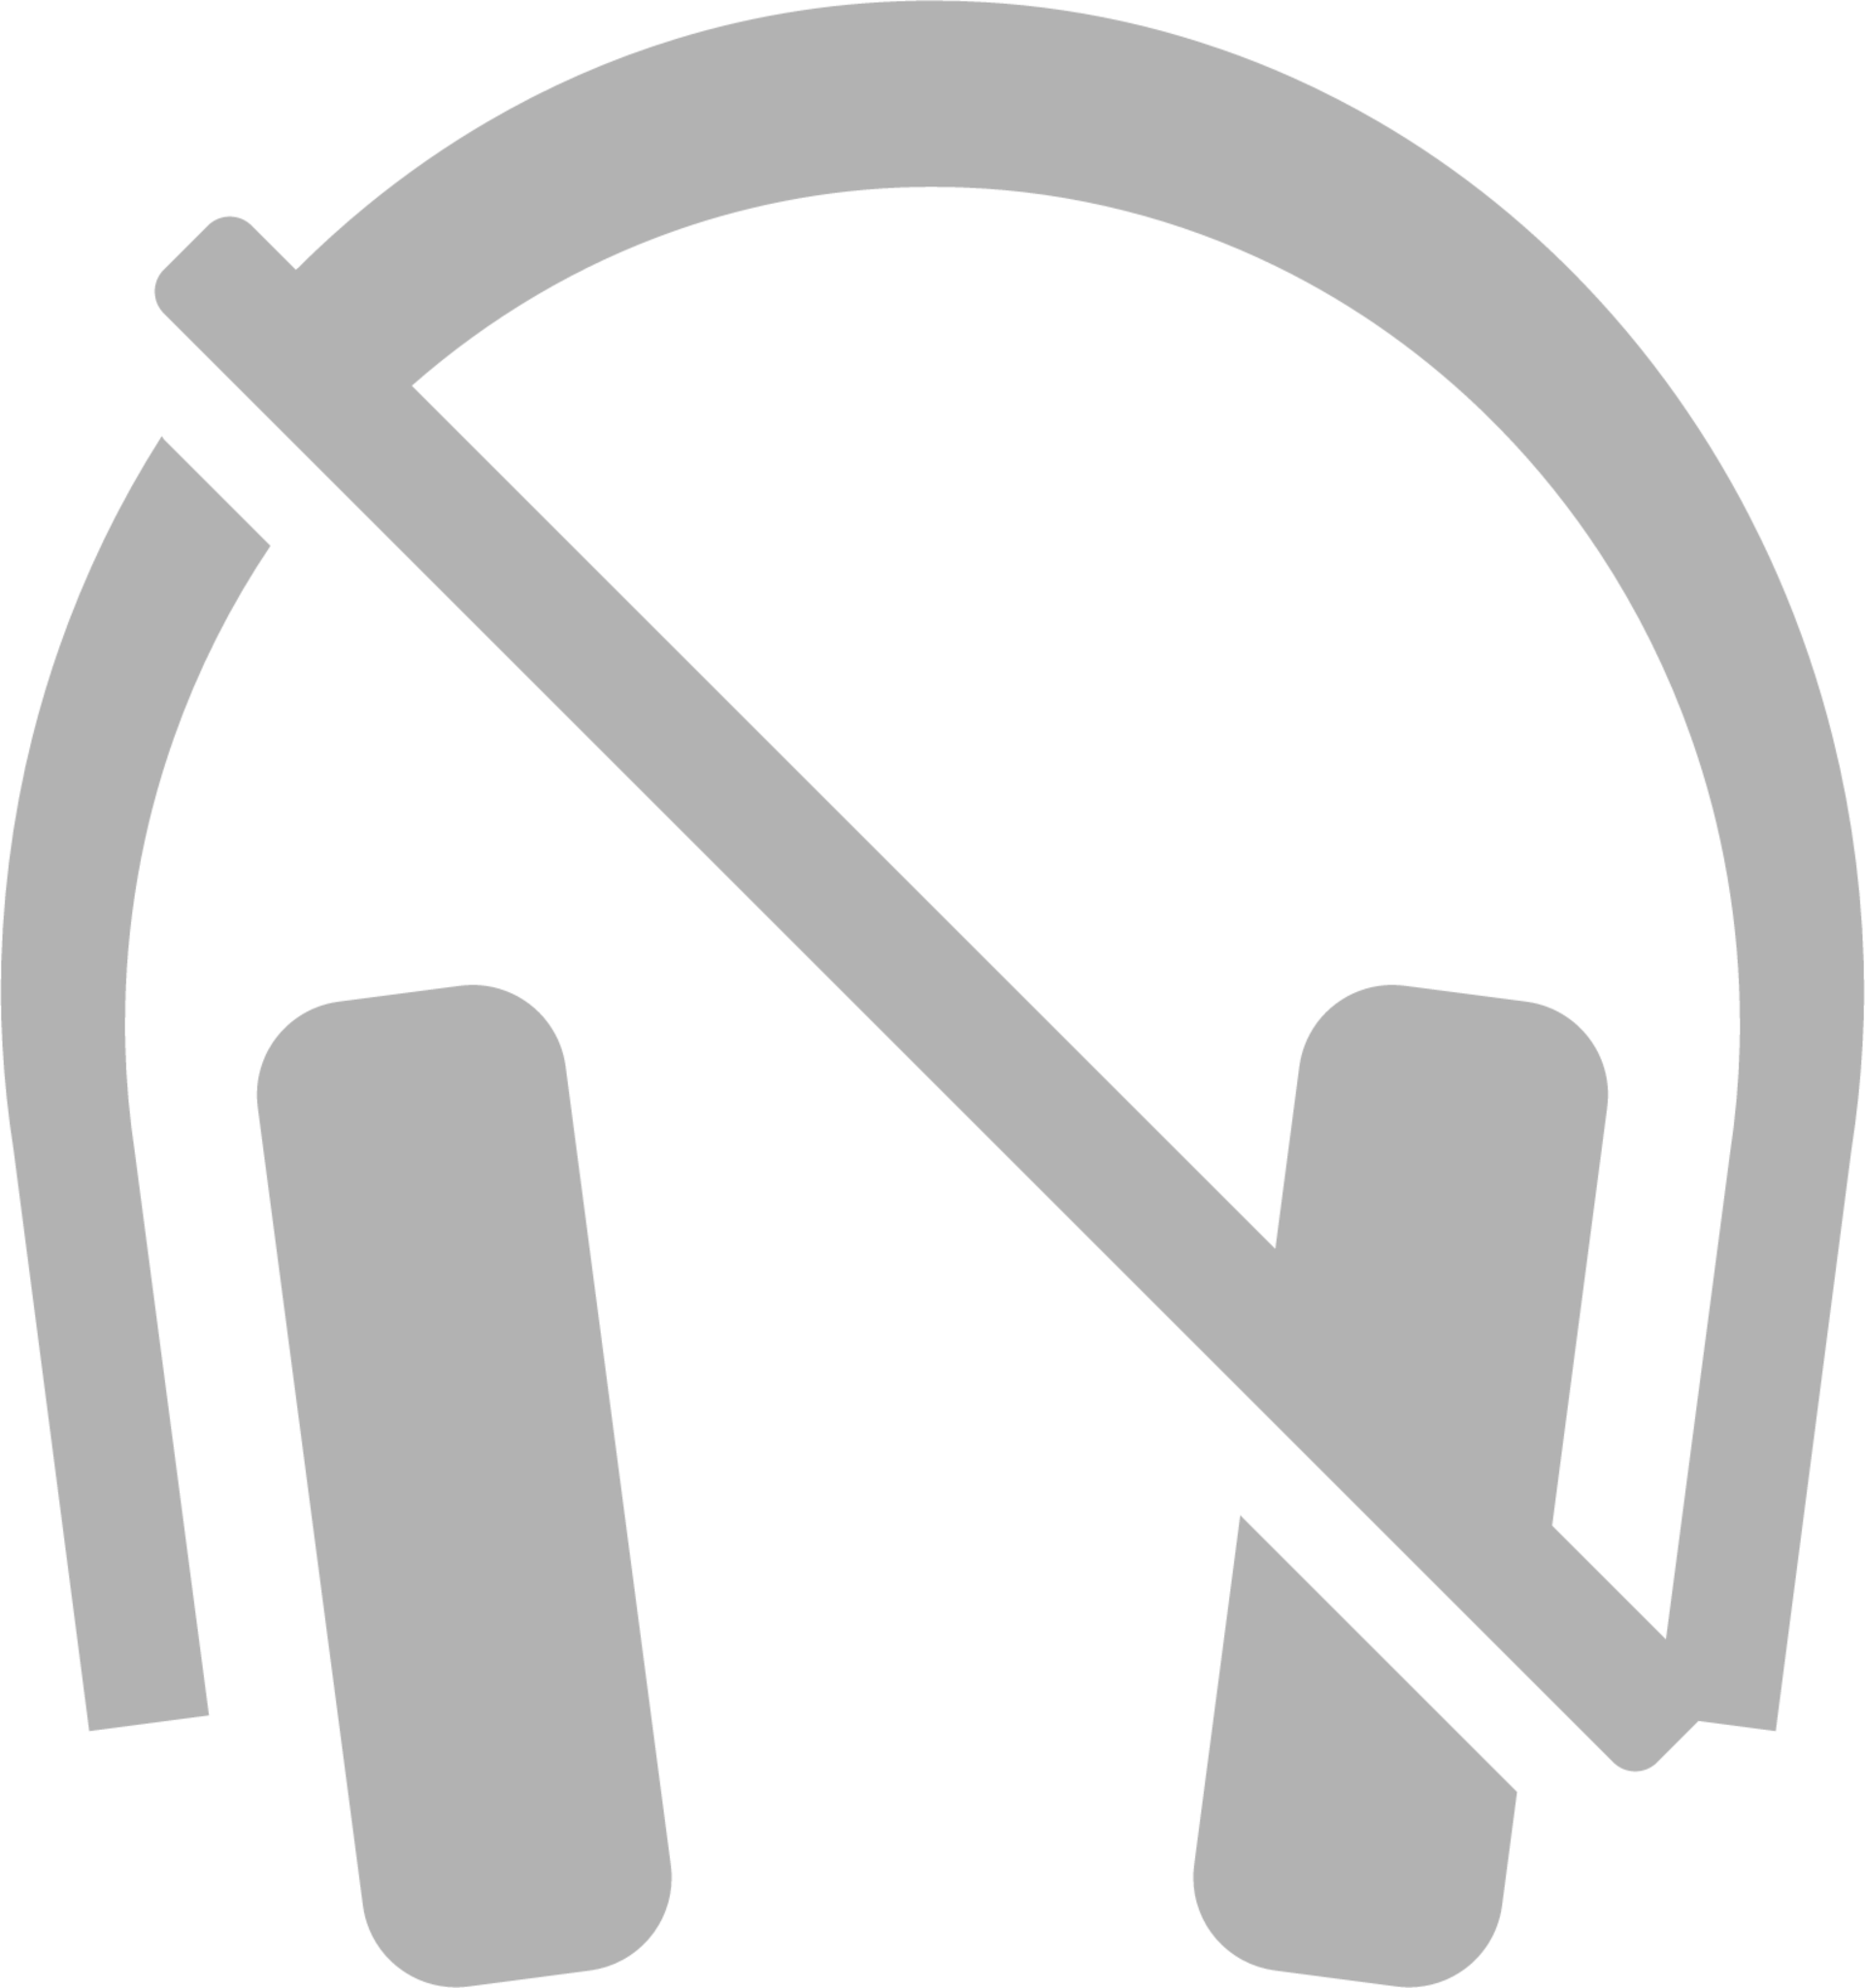 audio volume muted headphones symbolic icon